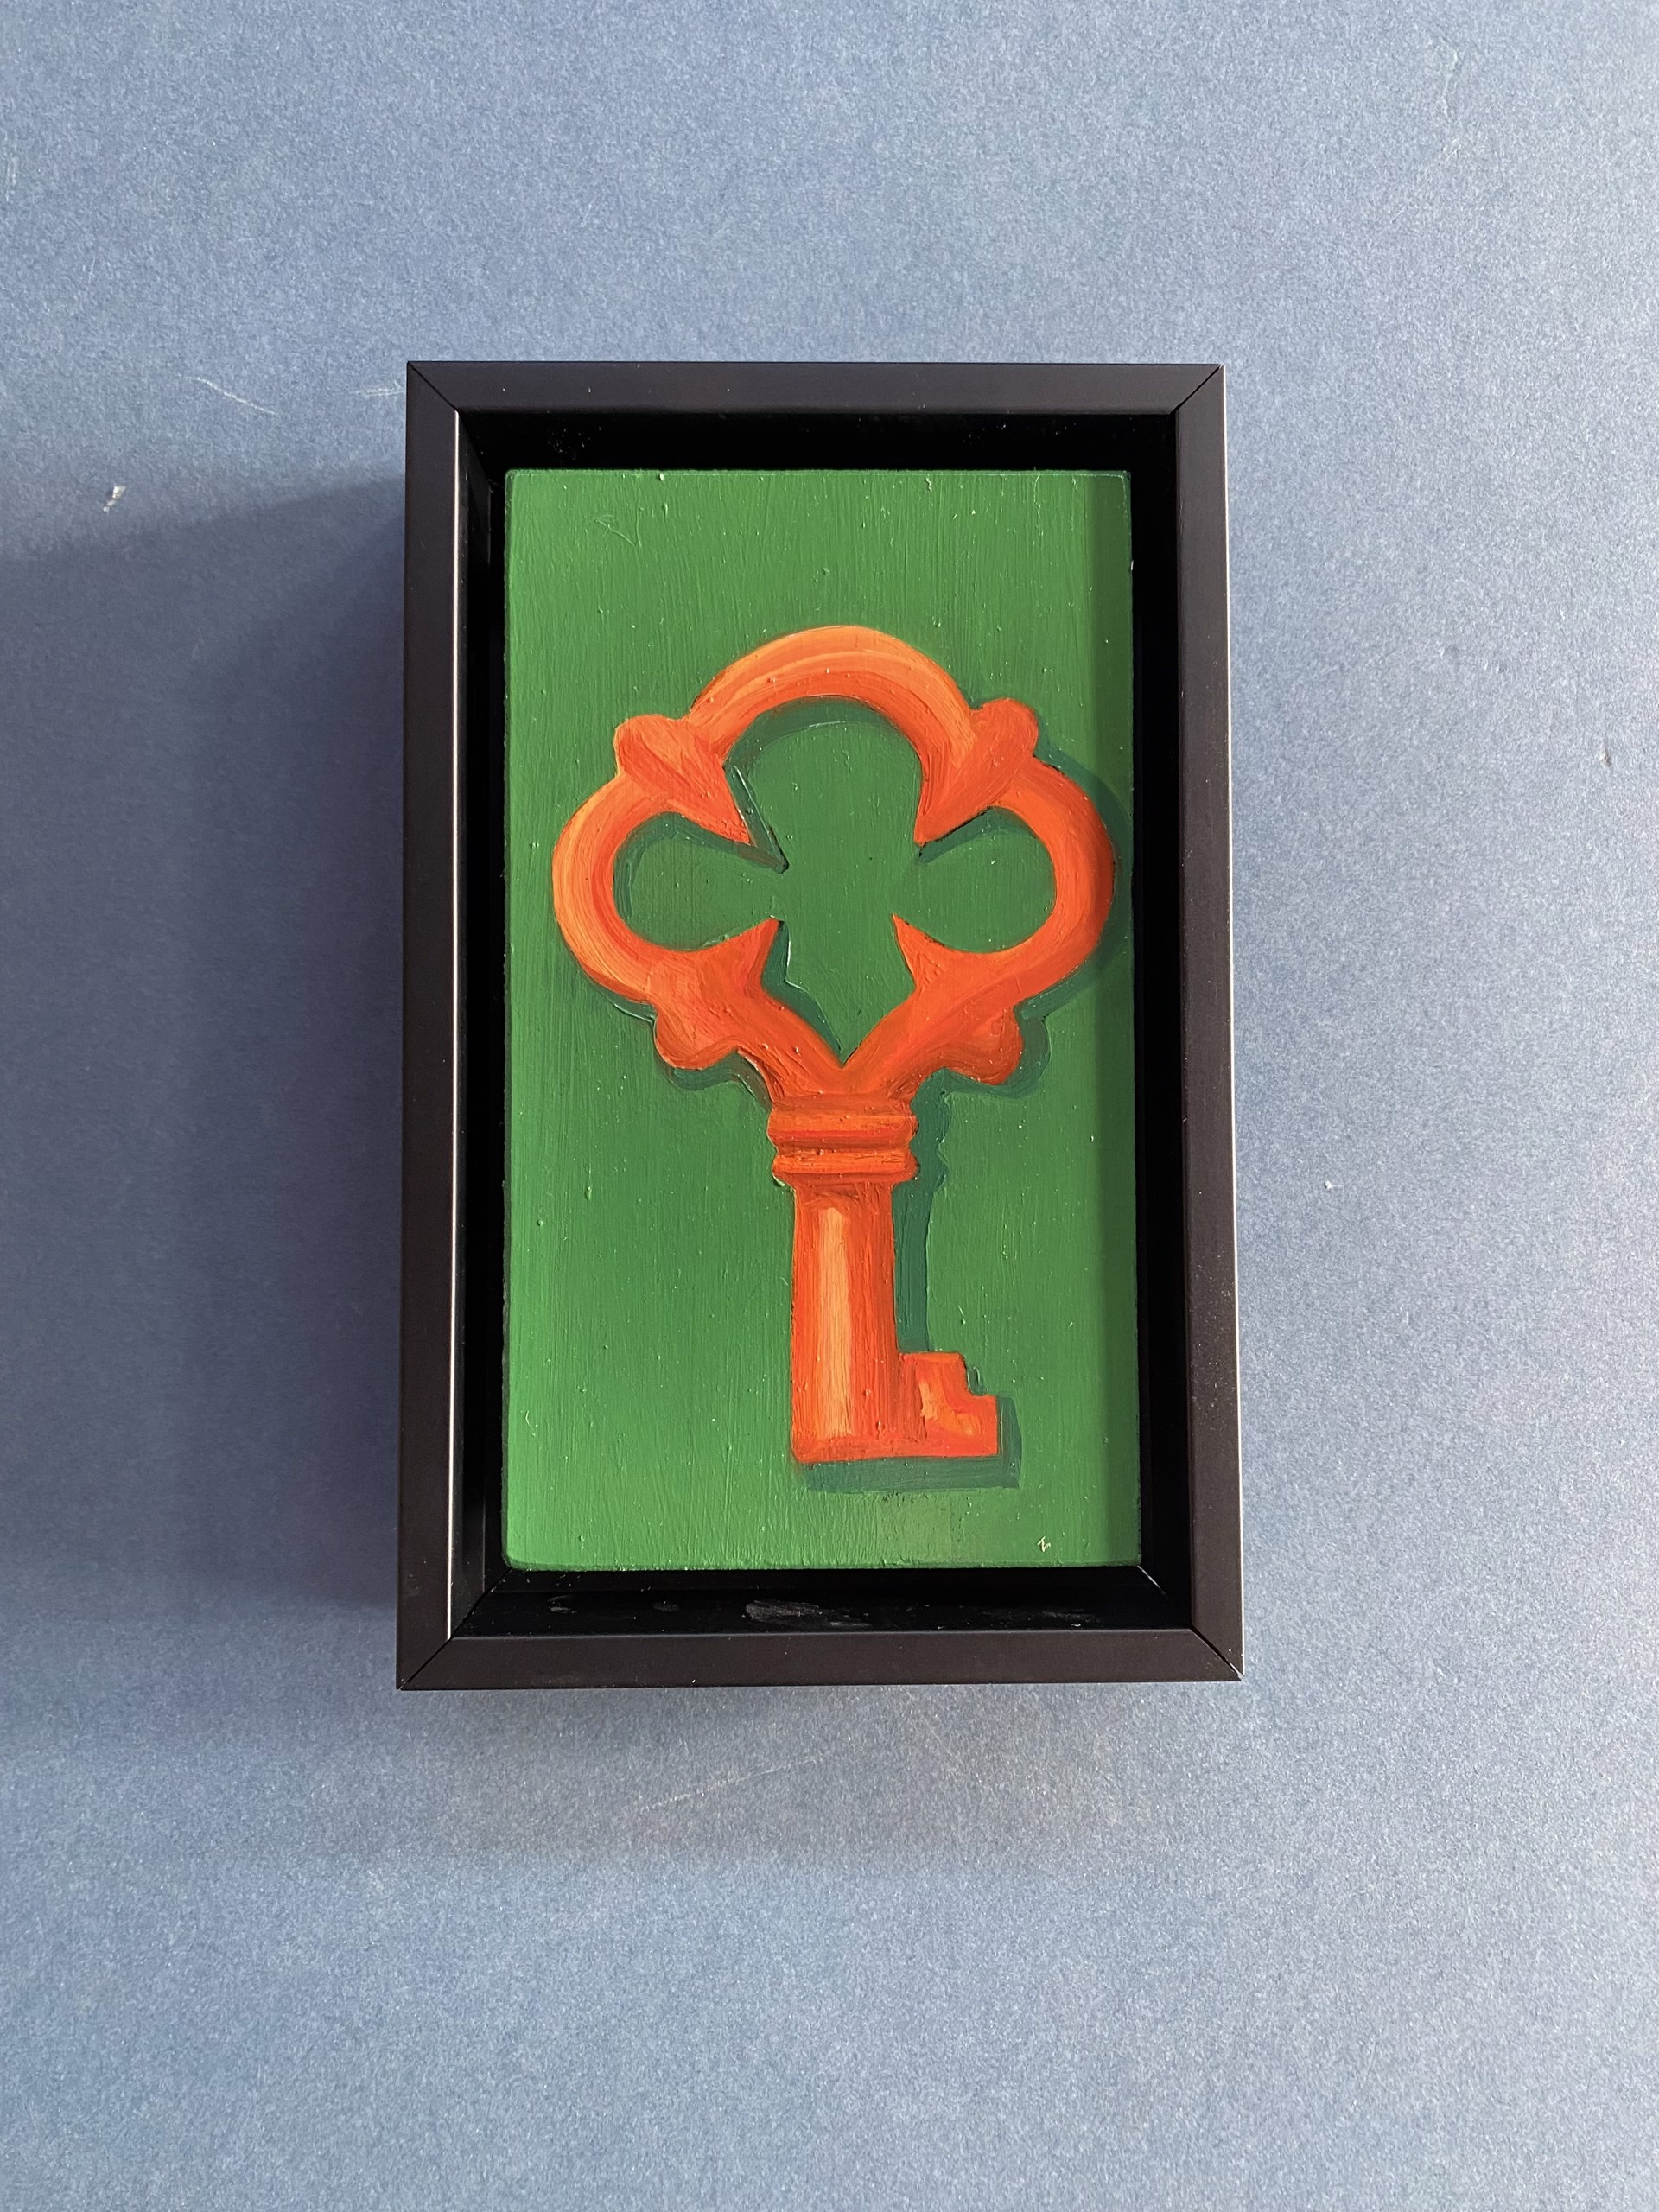 Key No. 63 by Stephen Wells